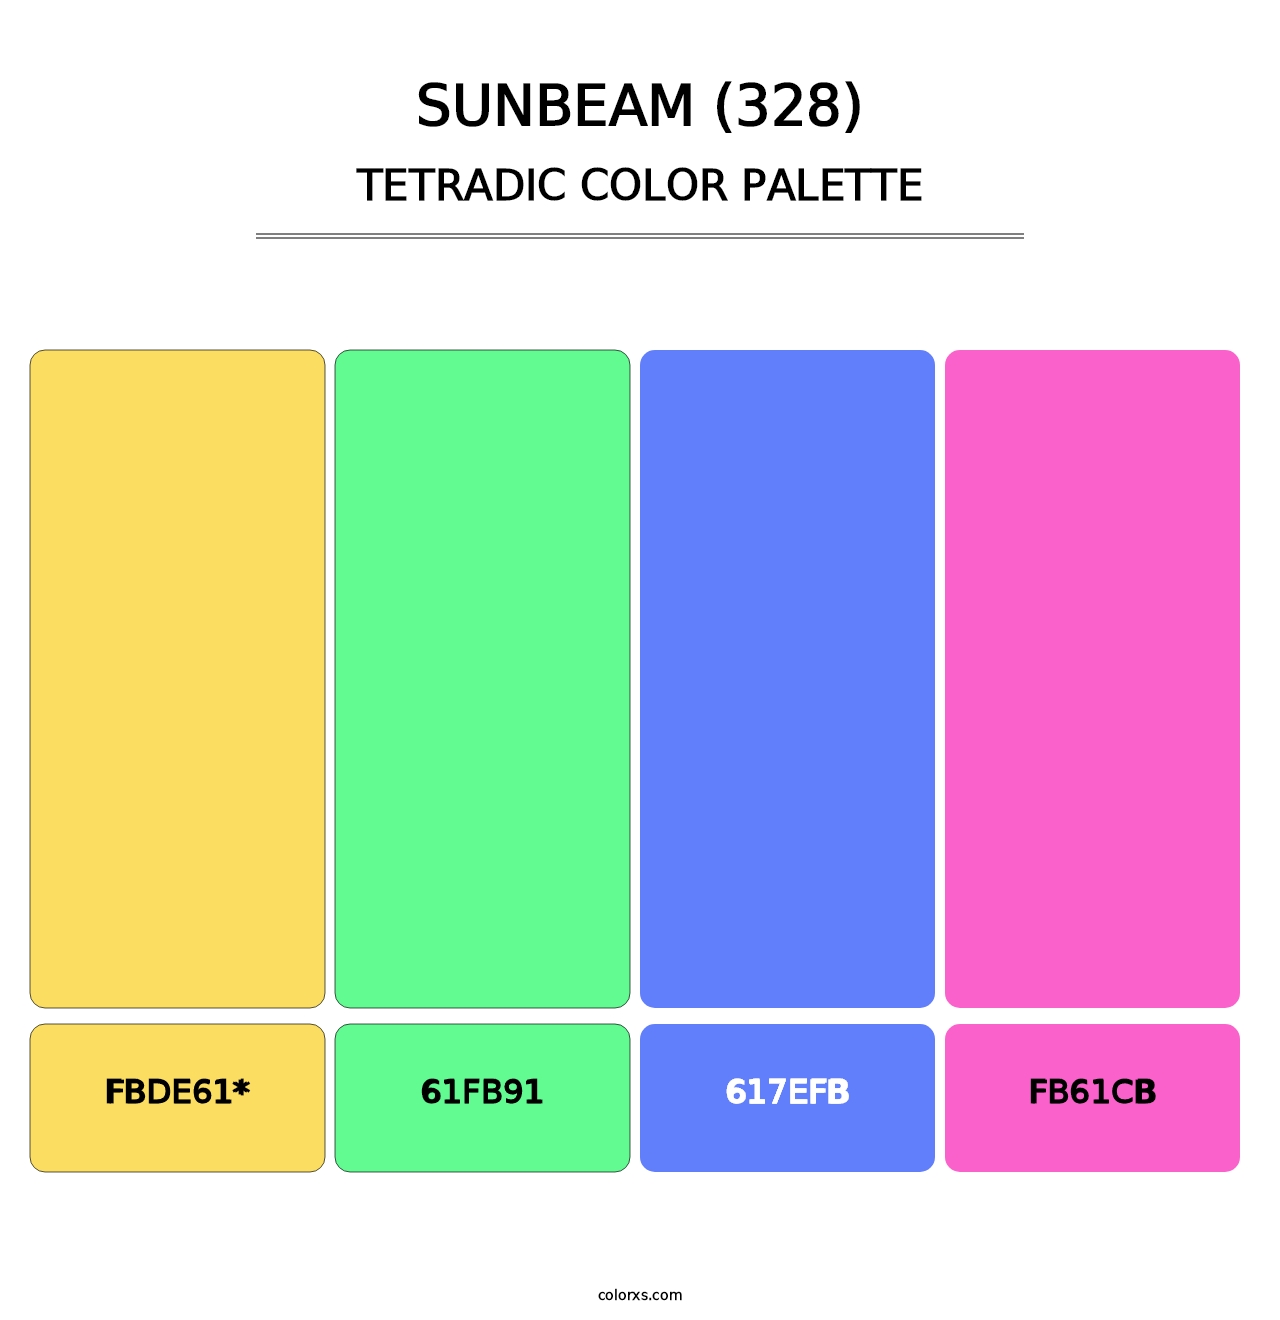 Sunbeam (328) - Tetradic Color Palette